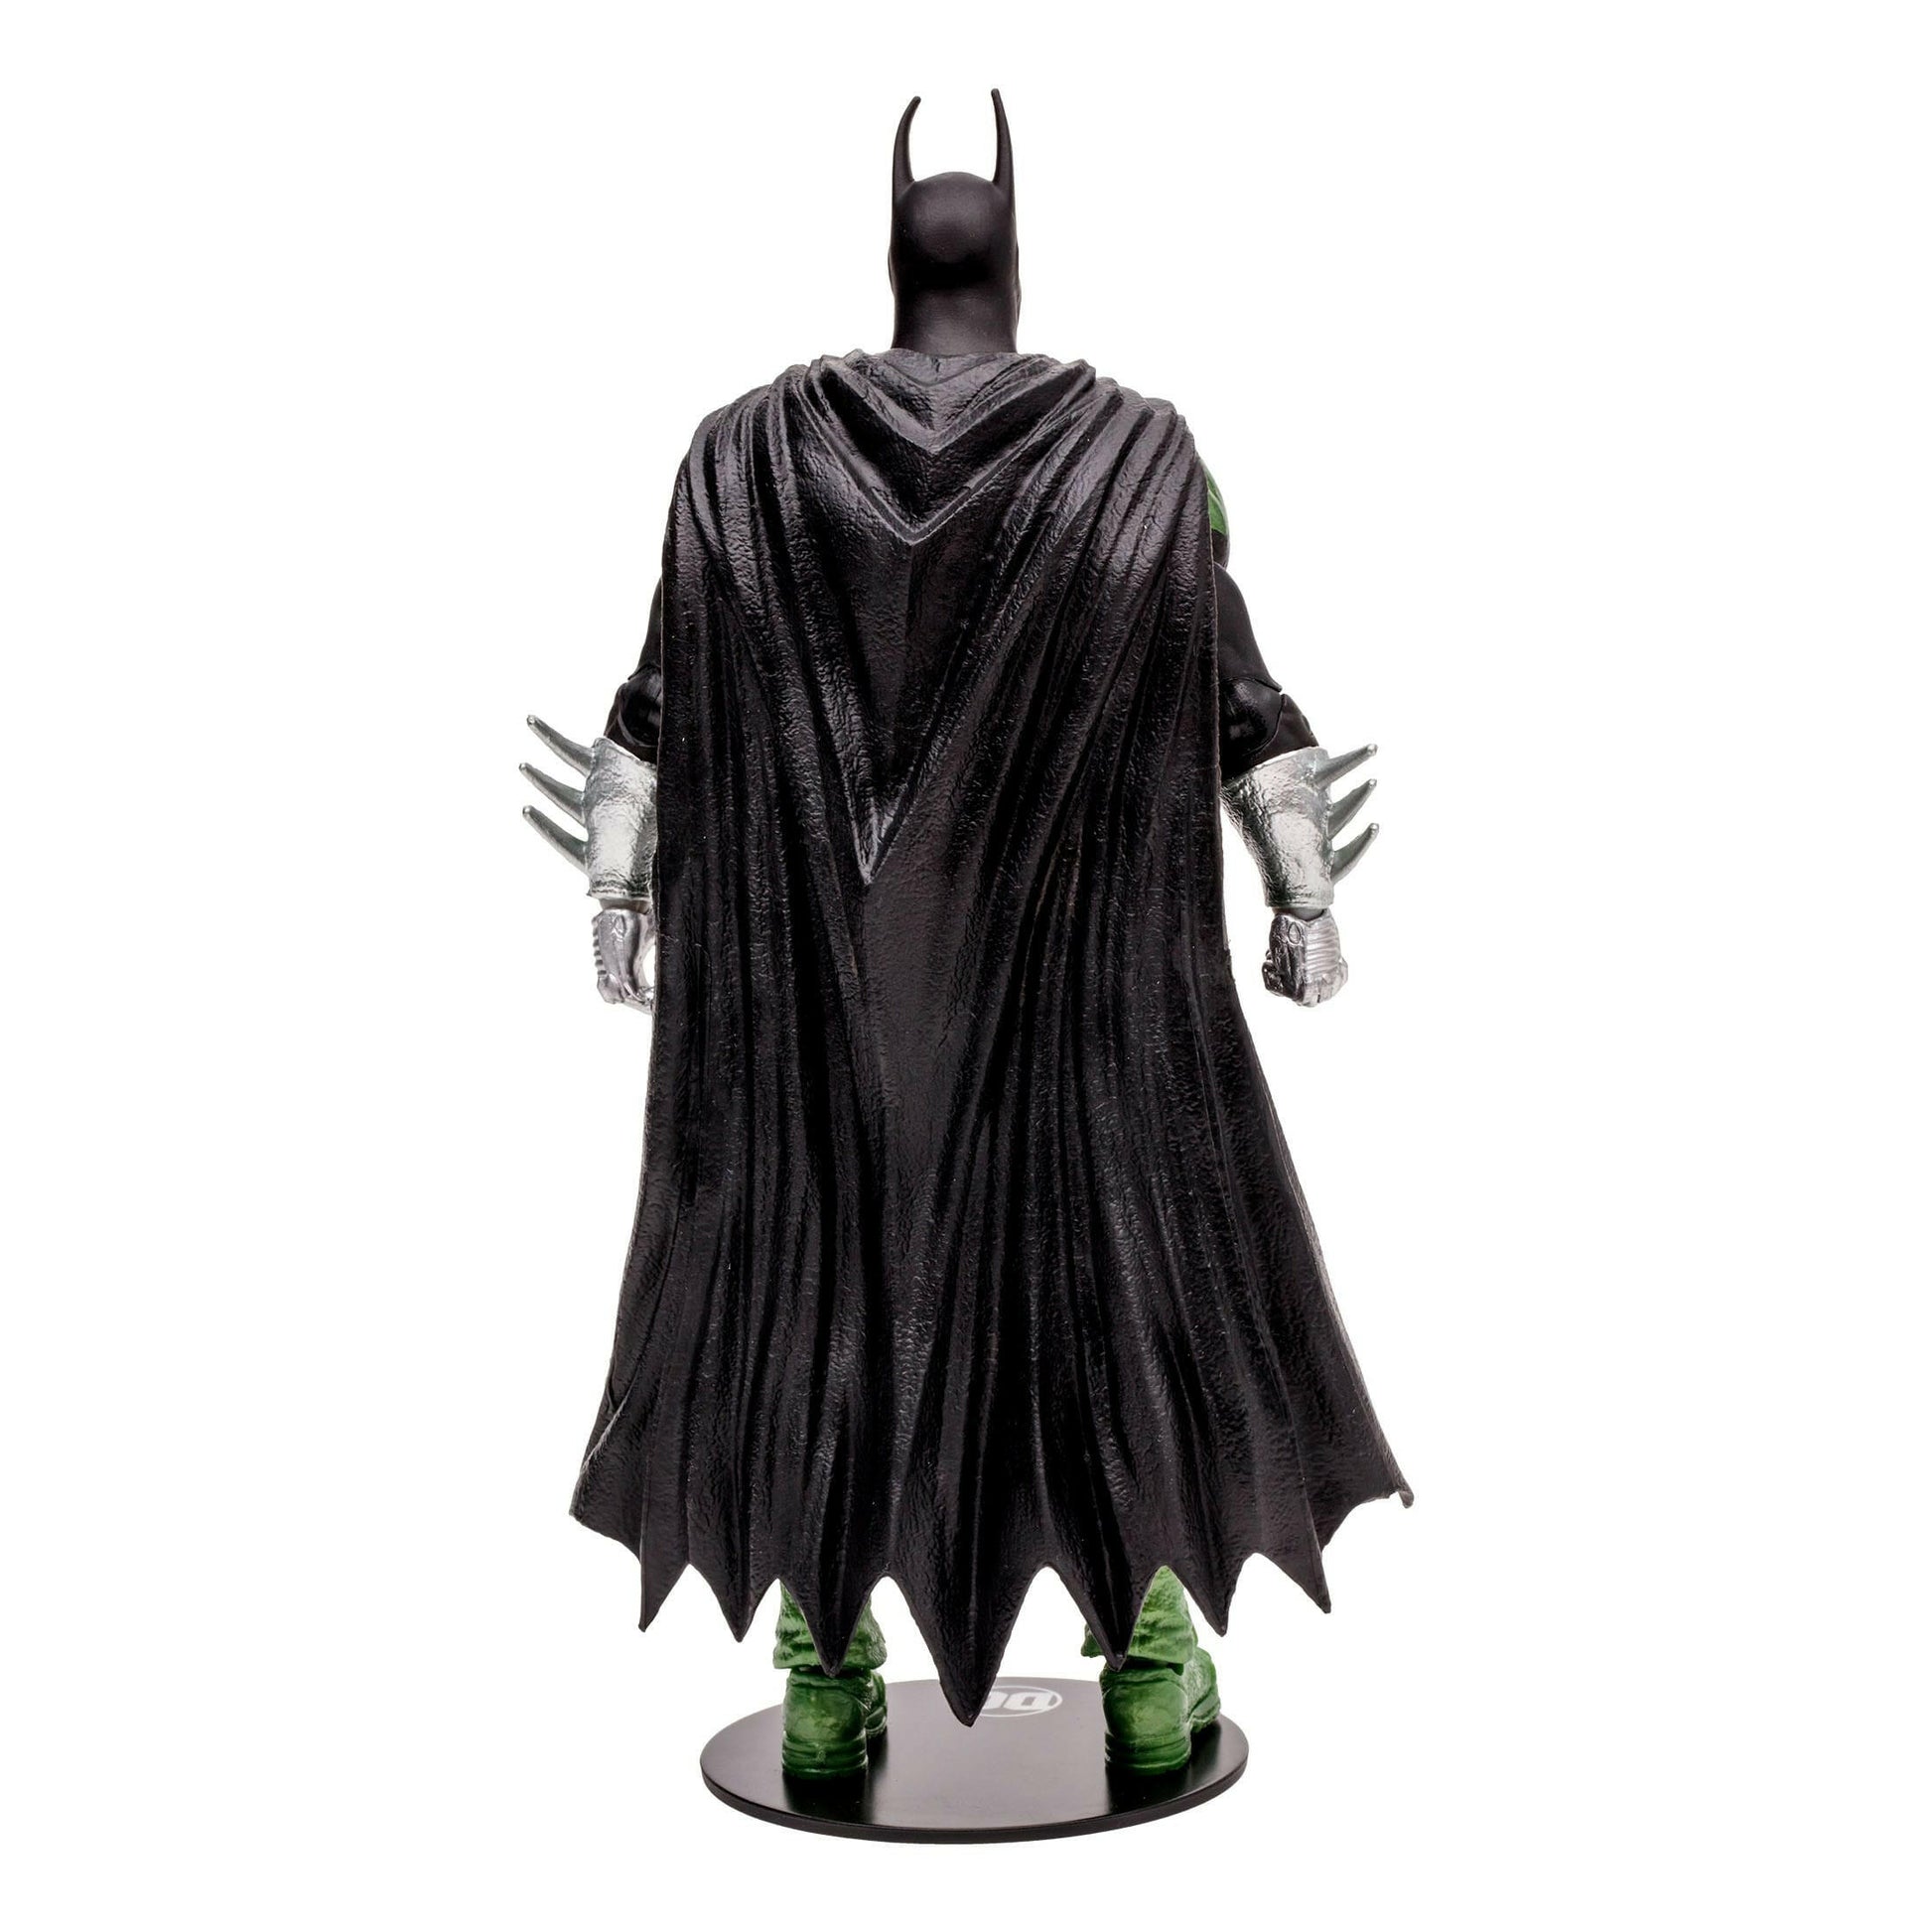 McFarlane DC Multiverse Collector Actionfigur Batman as Green Lantern 18cm McFarlane